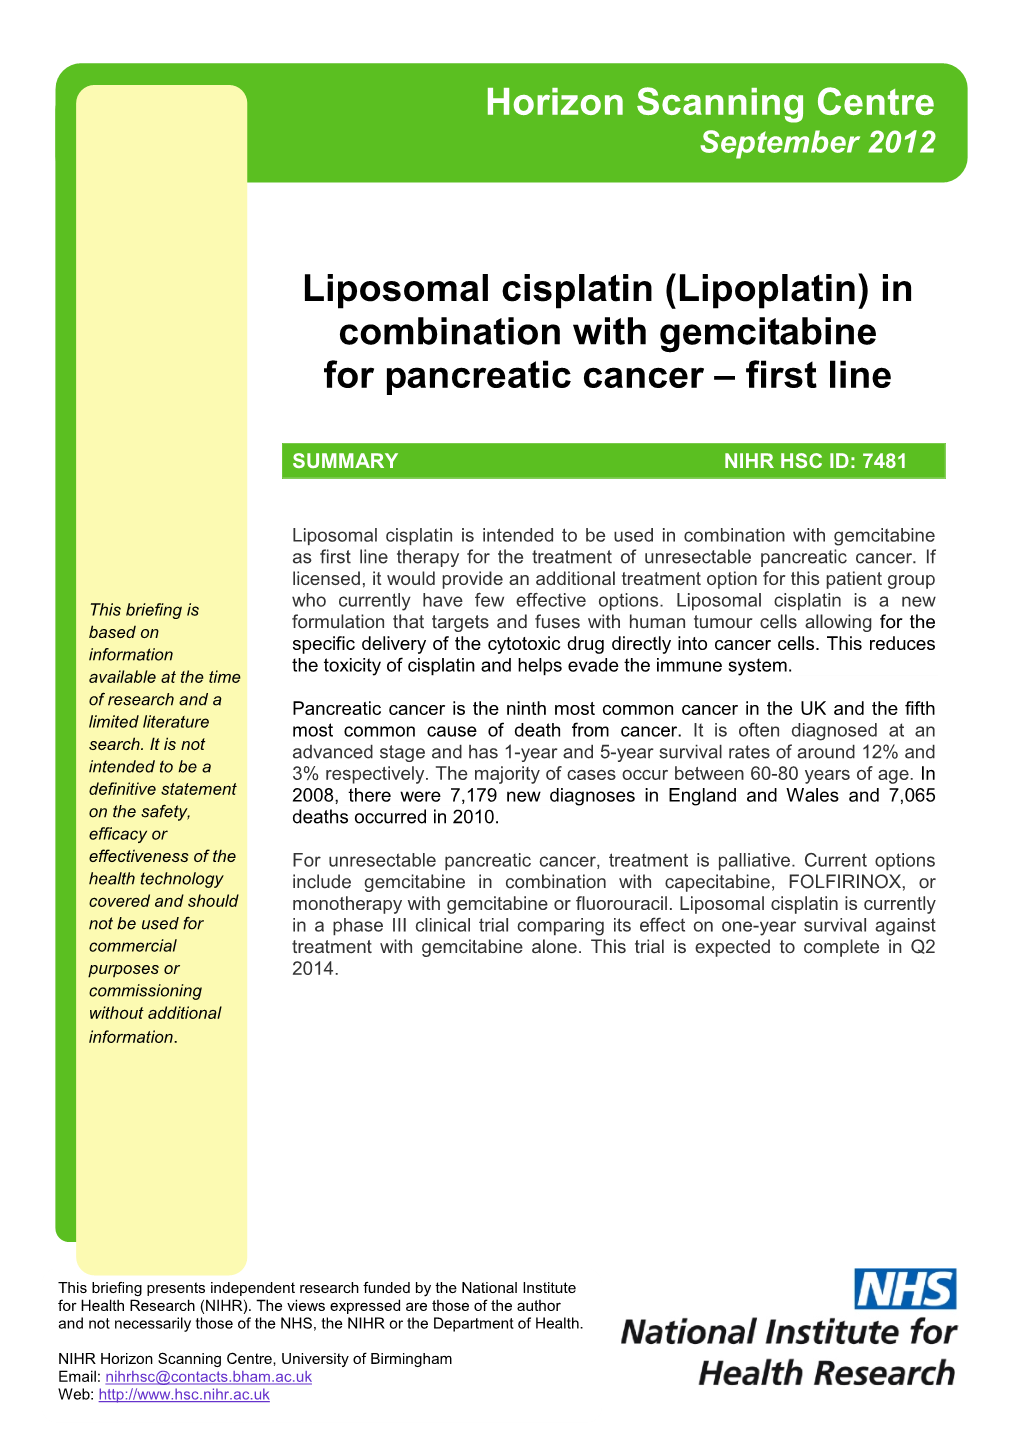 Liposomal Cisplatin (Lipoplatin) in Combination with Gemcitabine for Pancreatic Cancer – First Line